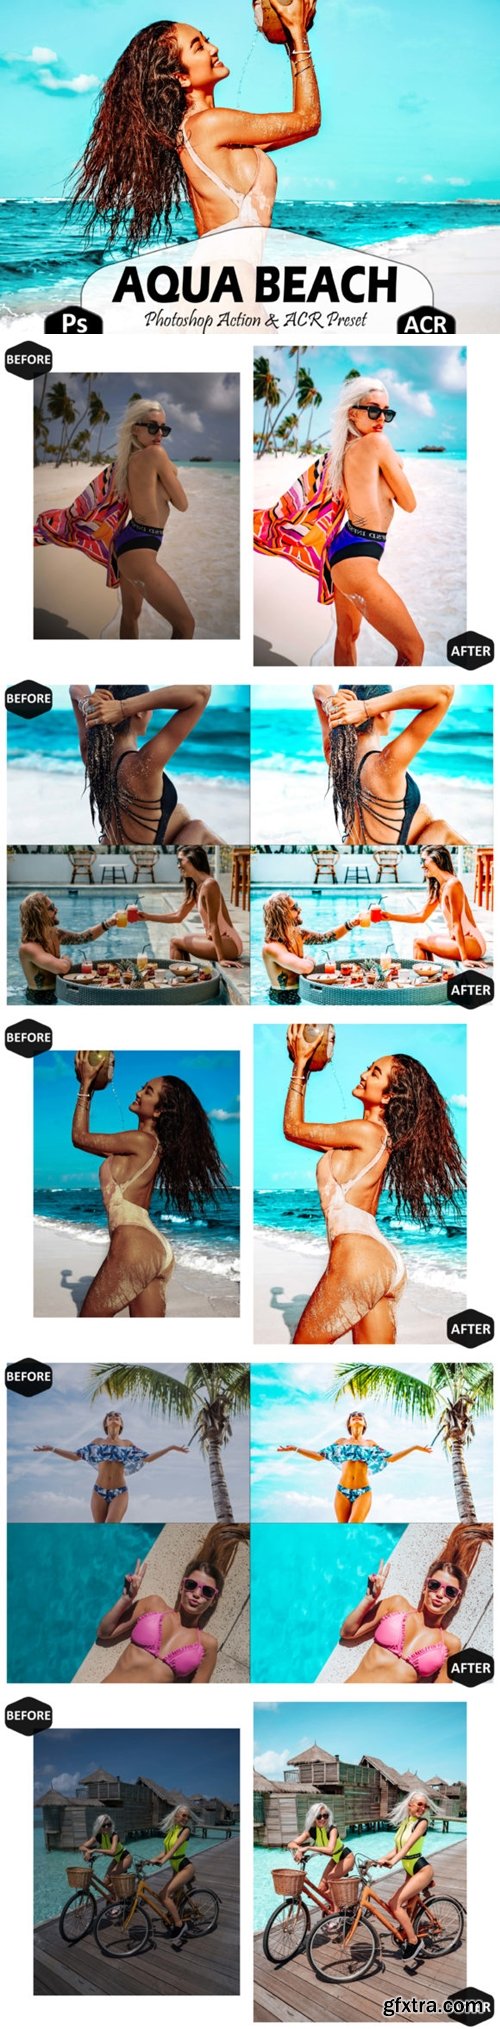 10 Aqua Beach Photoshop Actions and ACR 4453672